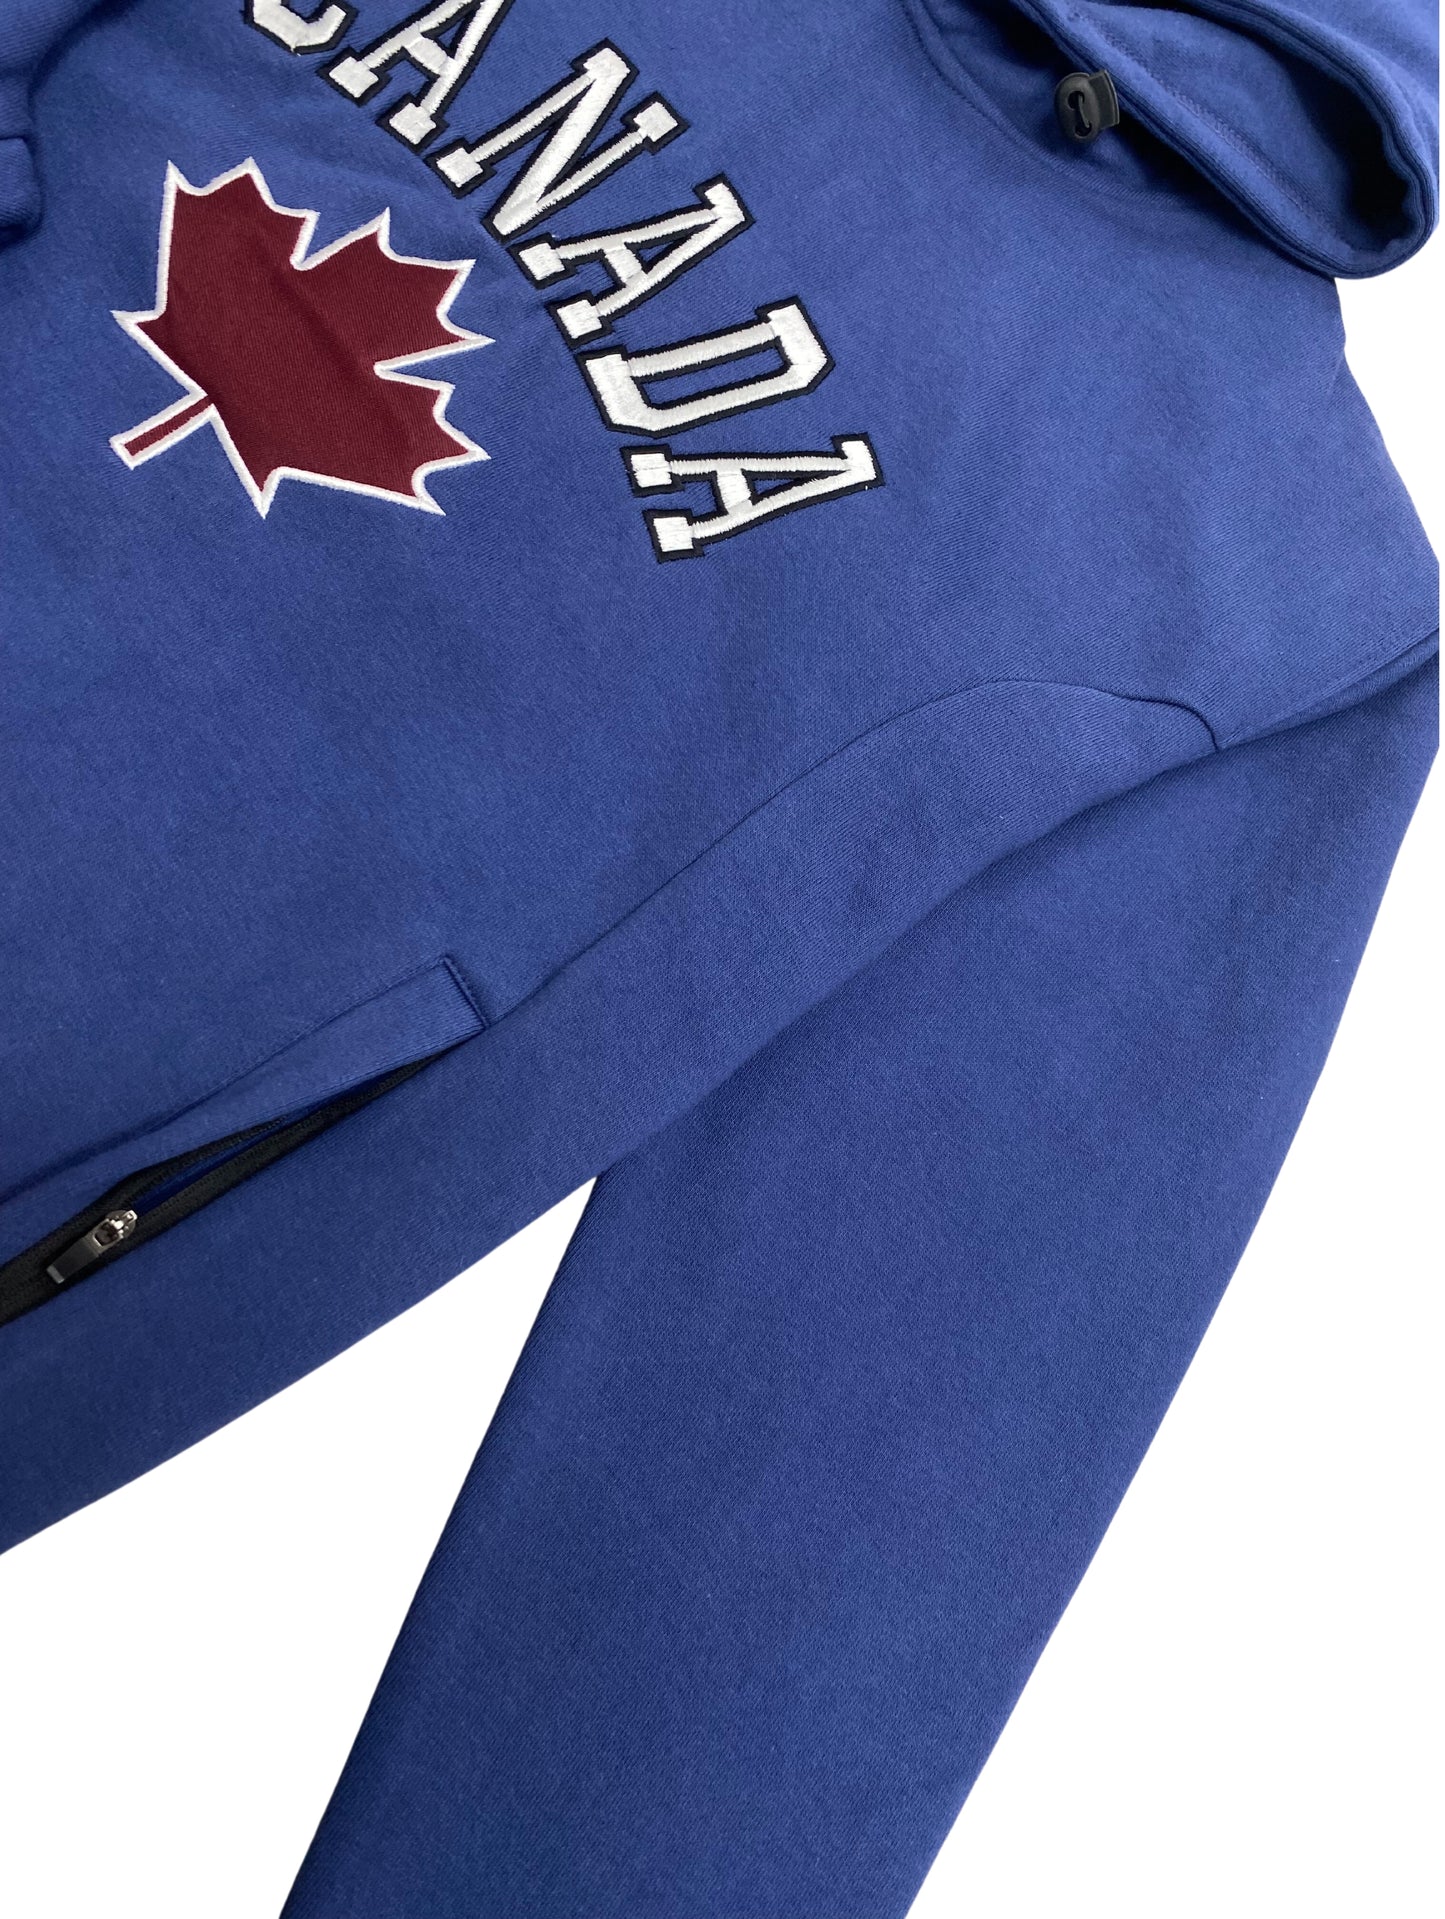 Classic Pullover Canada Print Sweatsuit